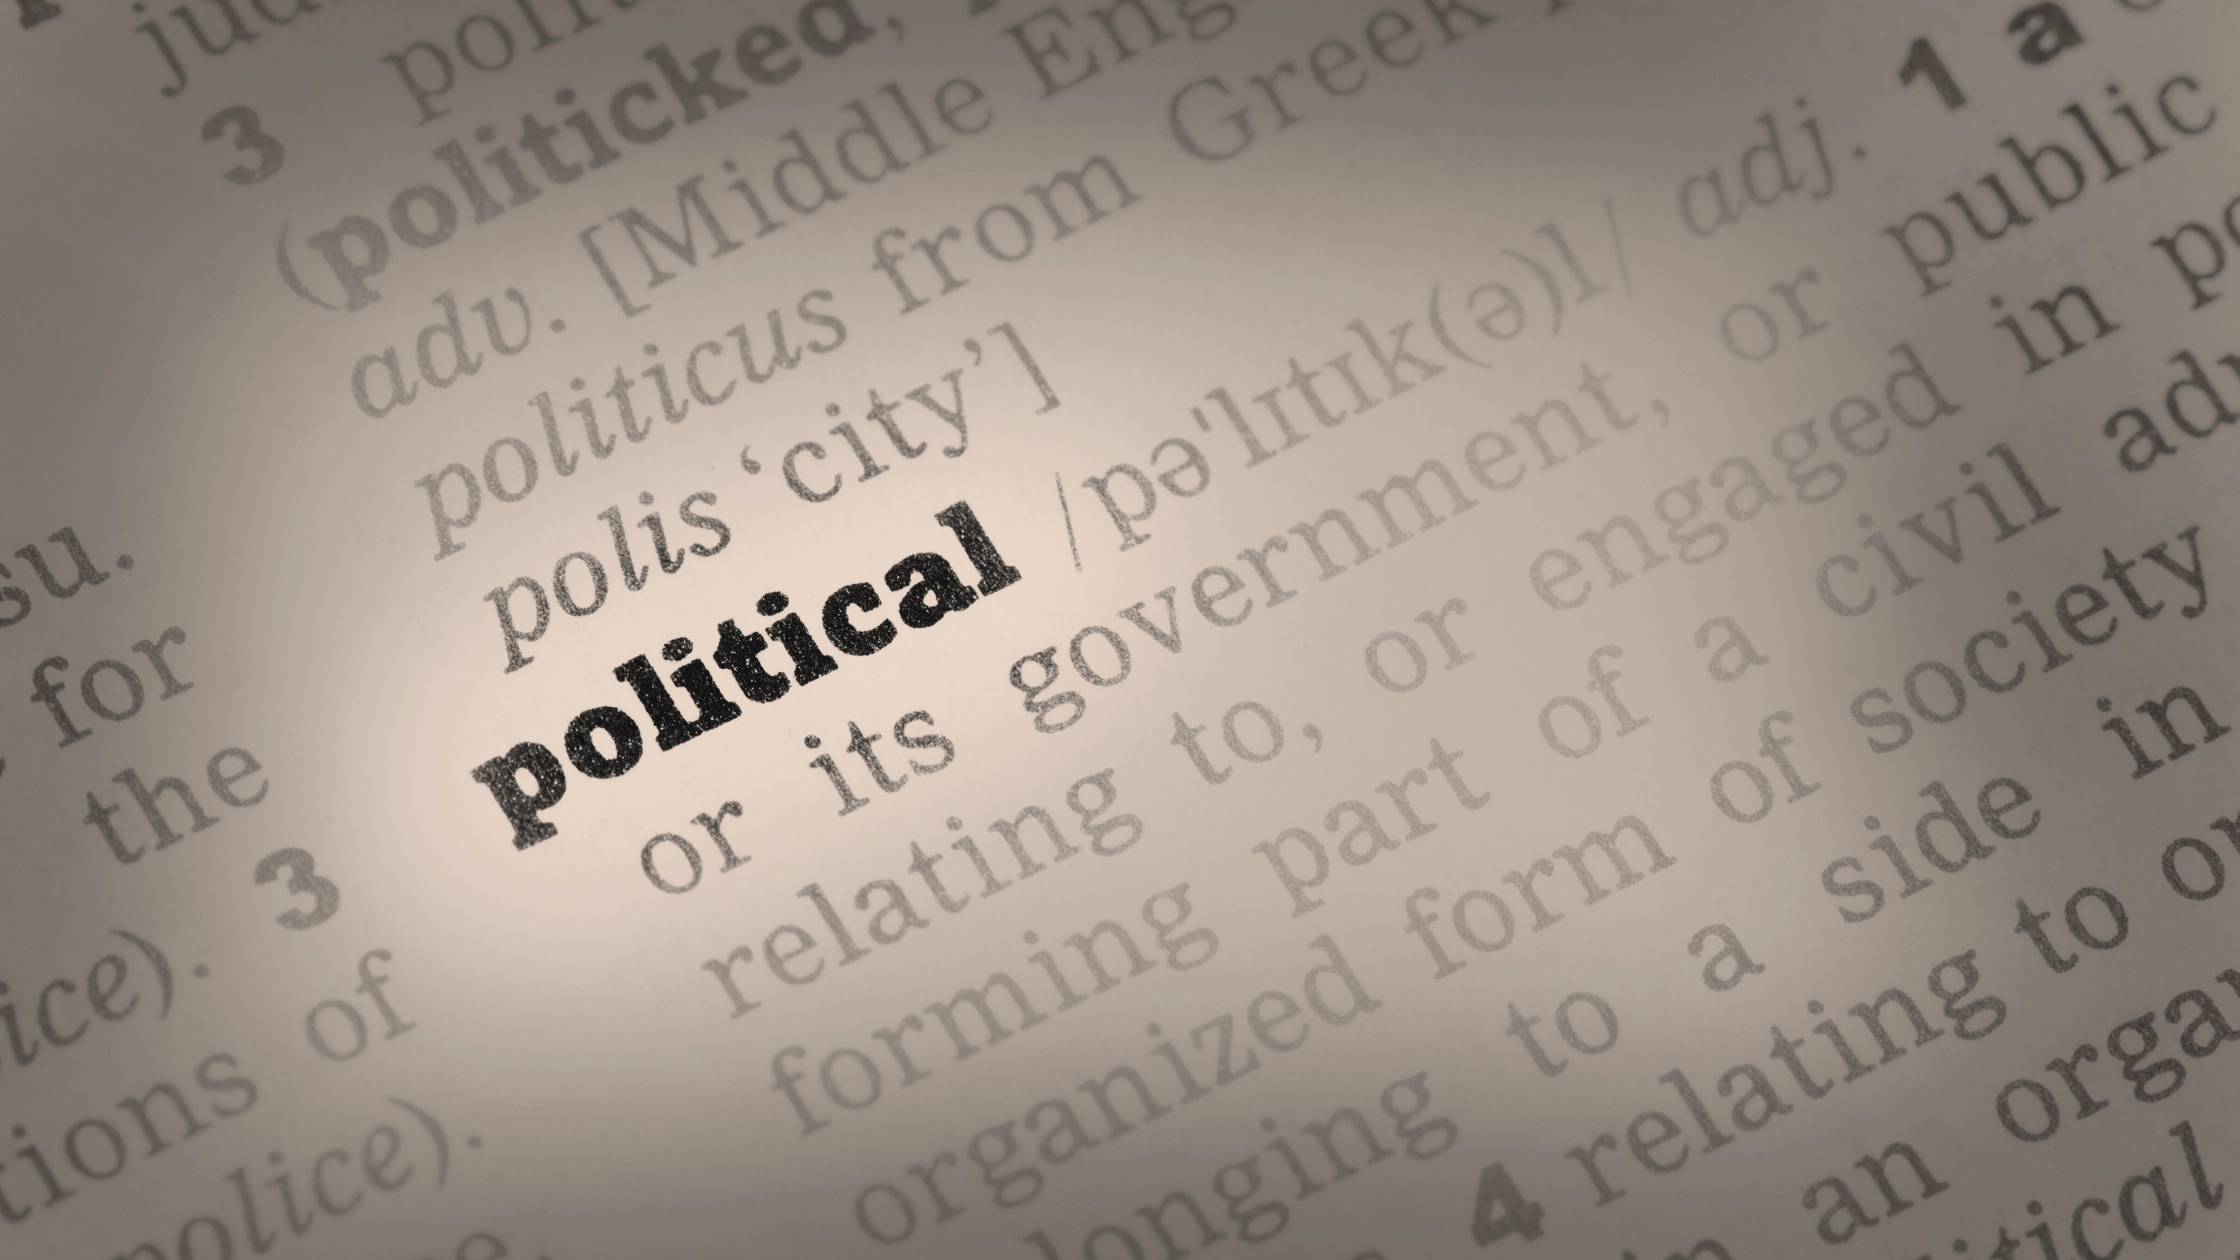 Decoding Political Jargon: A SC Conservative's Guide